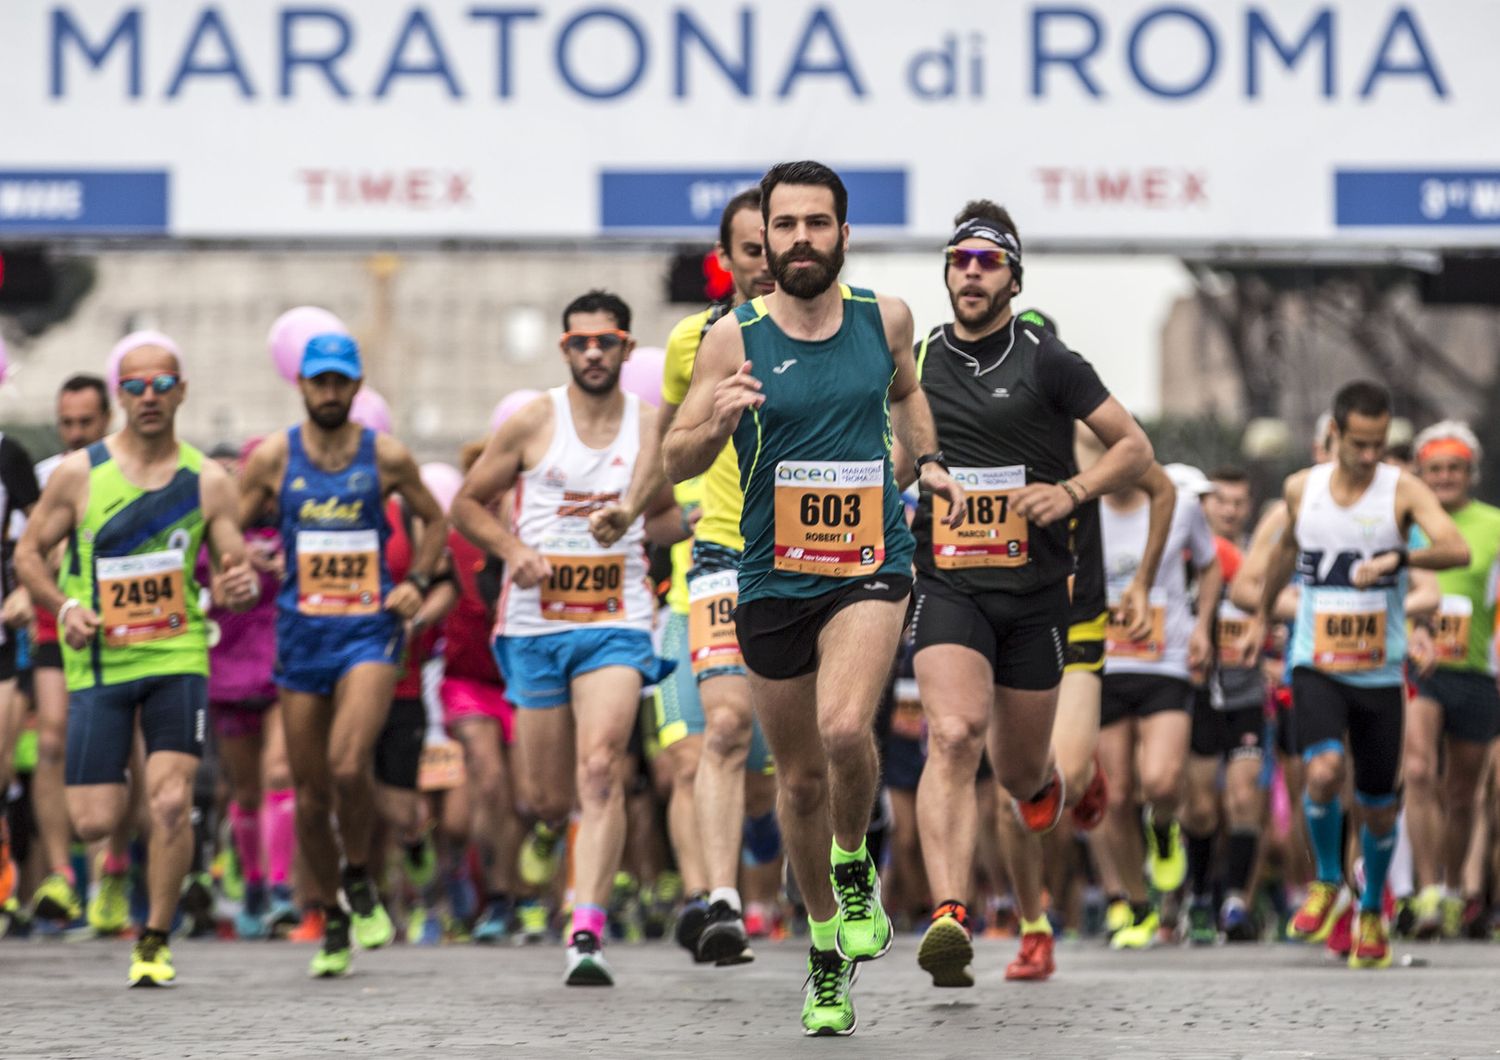 &nbsp; In 16mila alla Maratona di Roma (Agf)